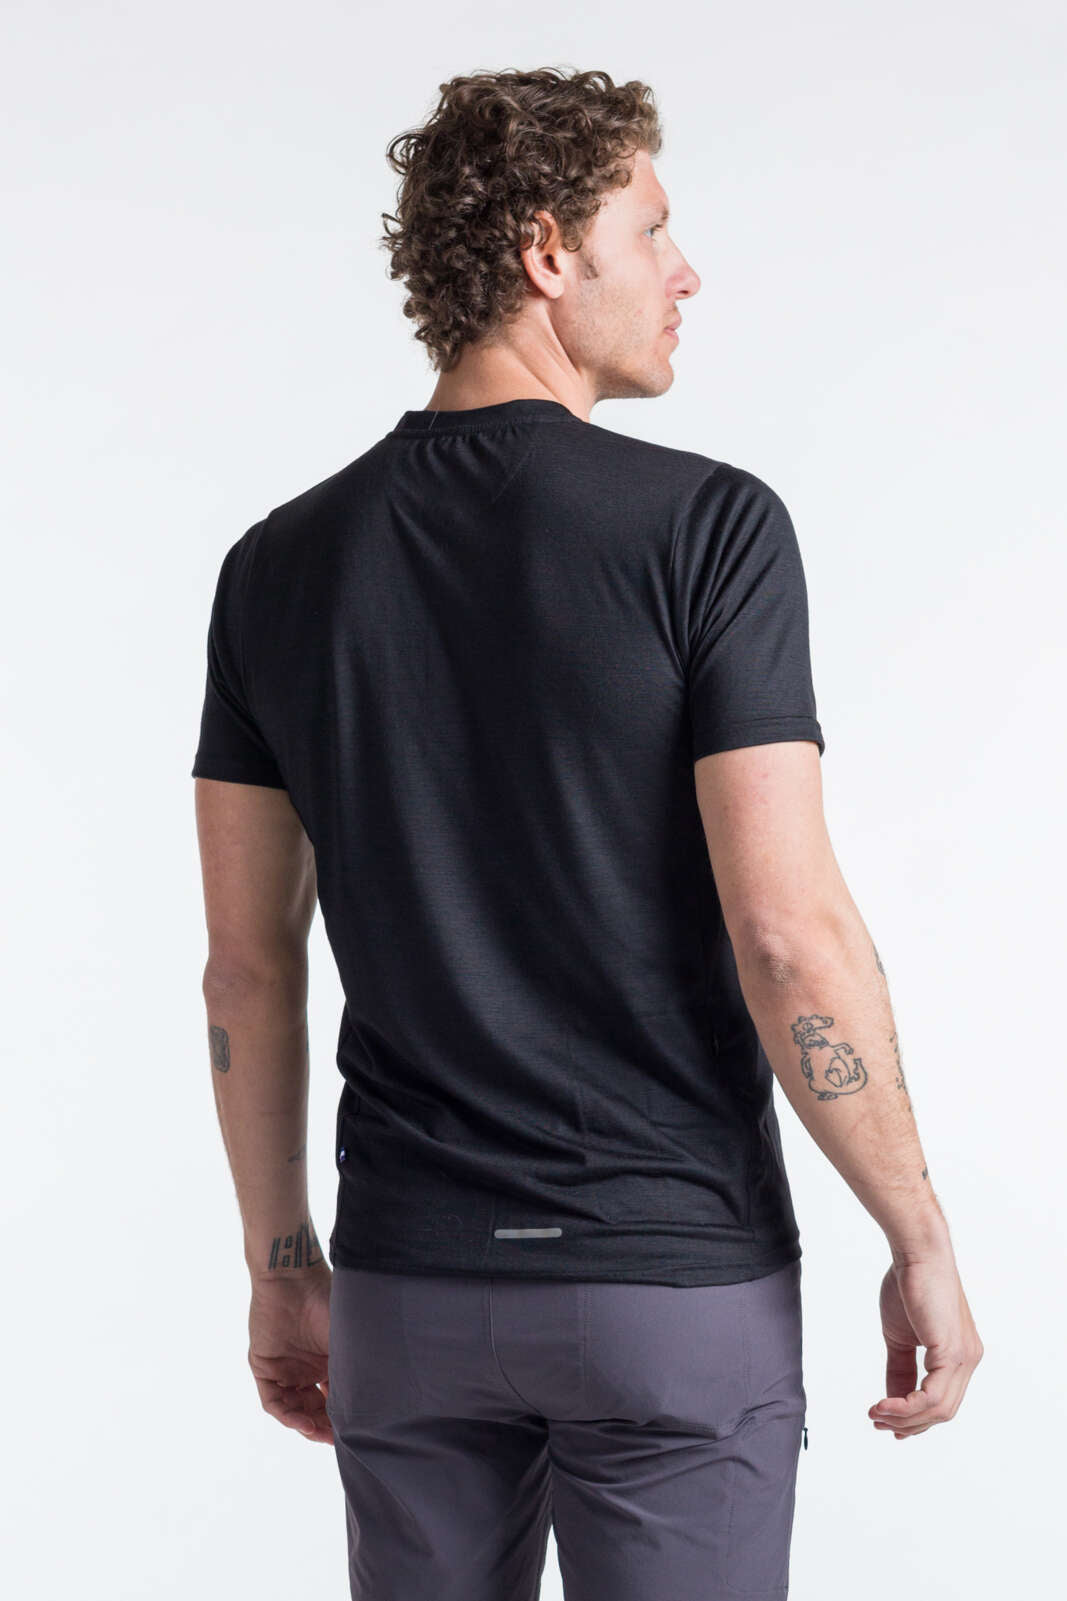 Black MTB Shirt for Men - Back View